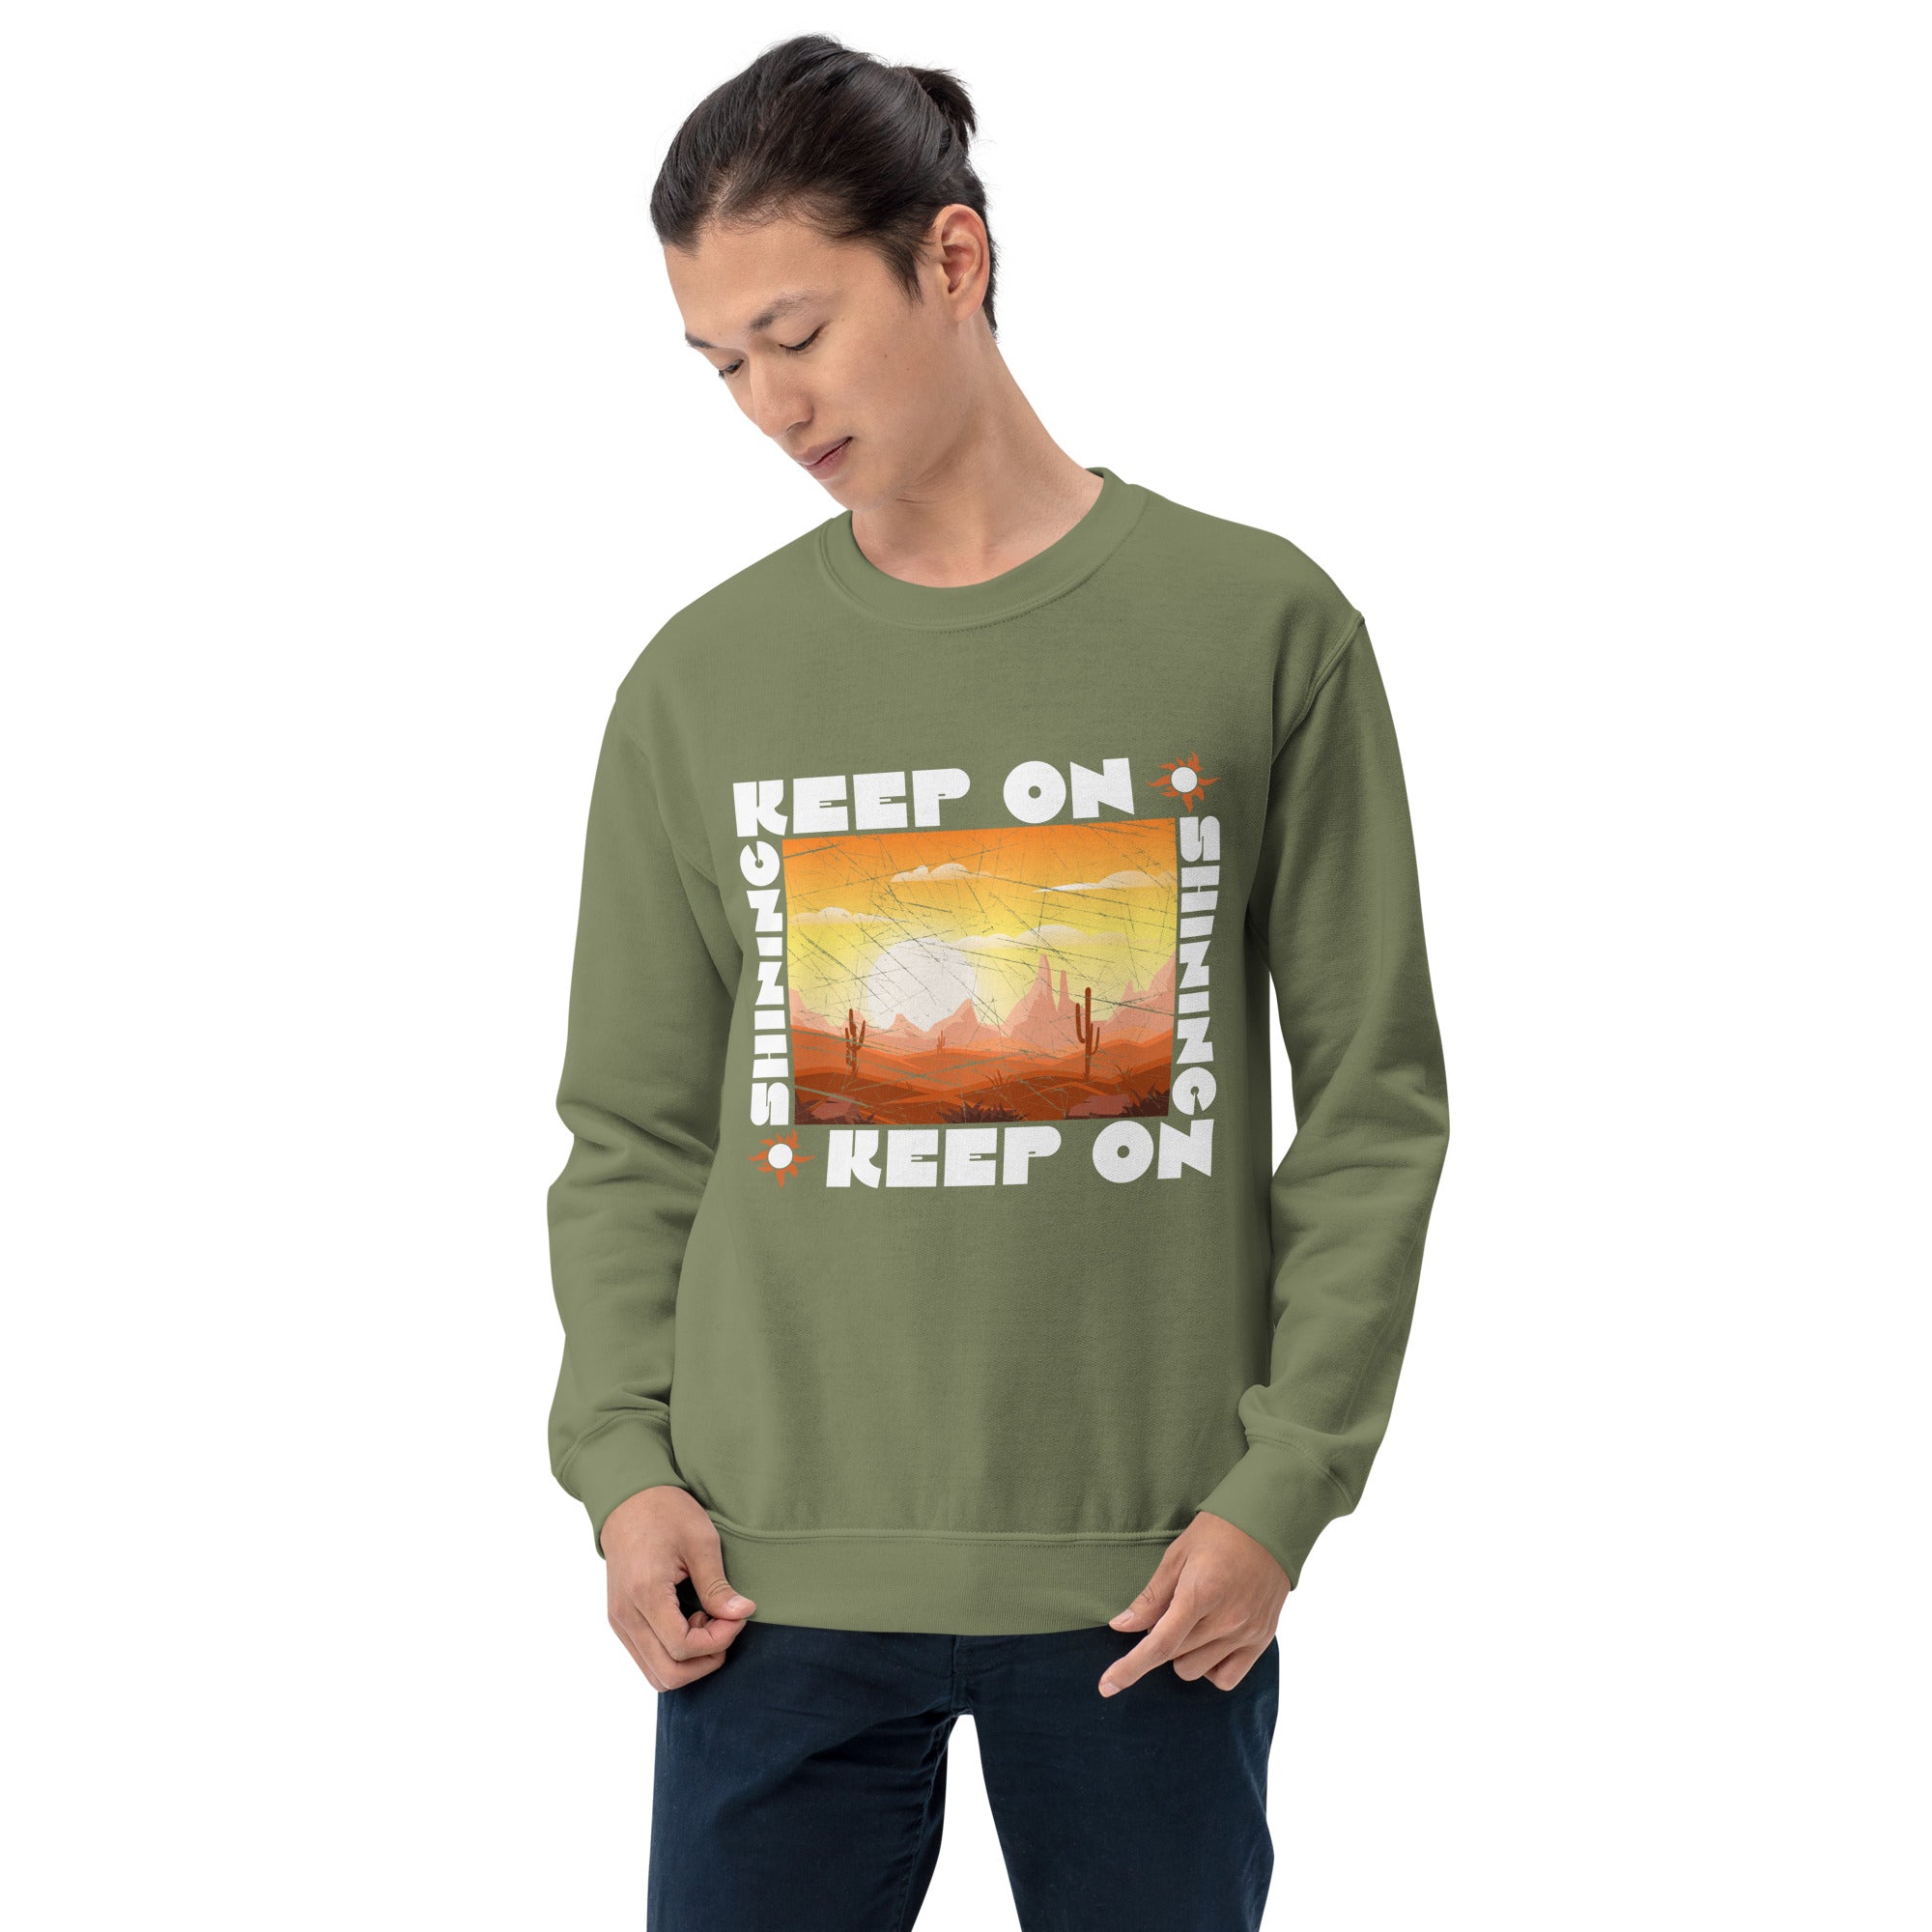 Keep On Shining Retro Aesthetic Sunshine Landscape Of Mountains Inspiring Words Positive Vibes Men's Sweatshirt